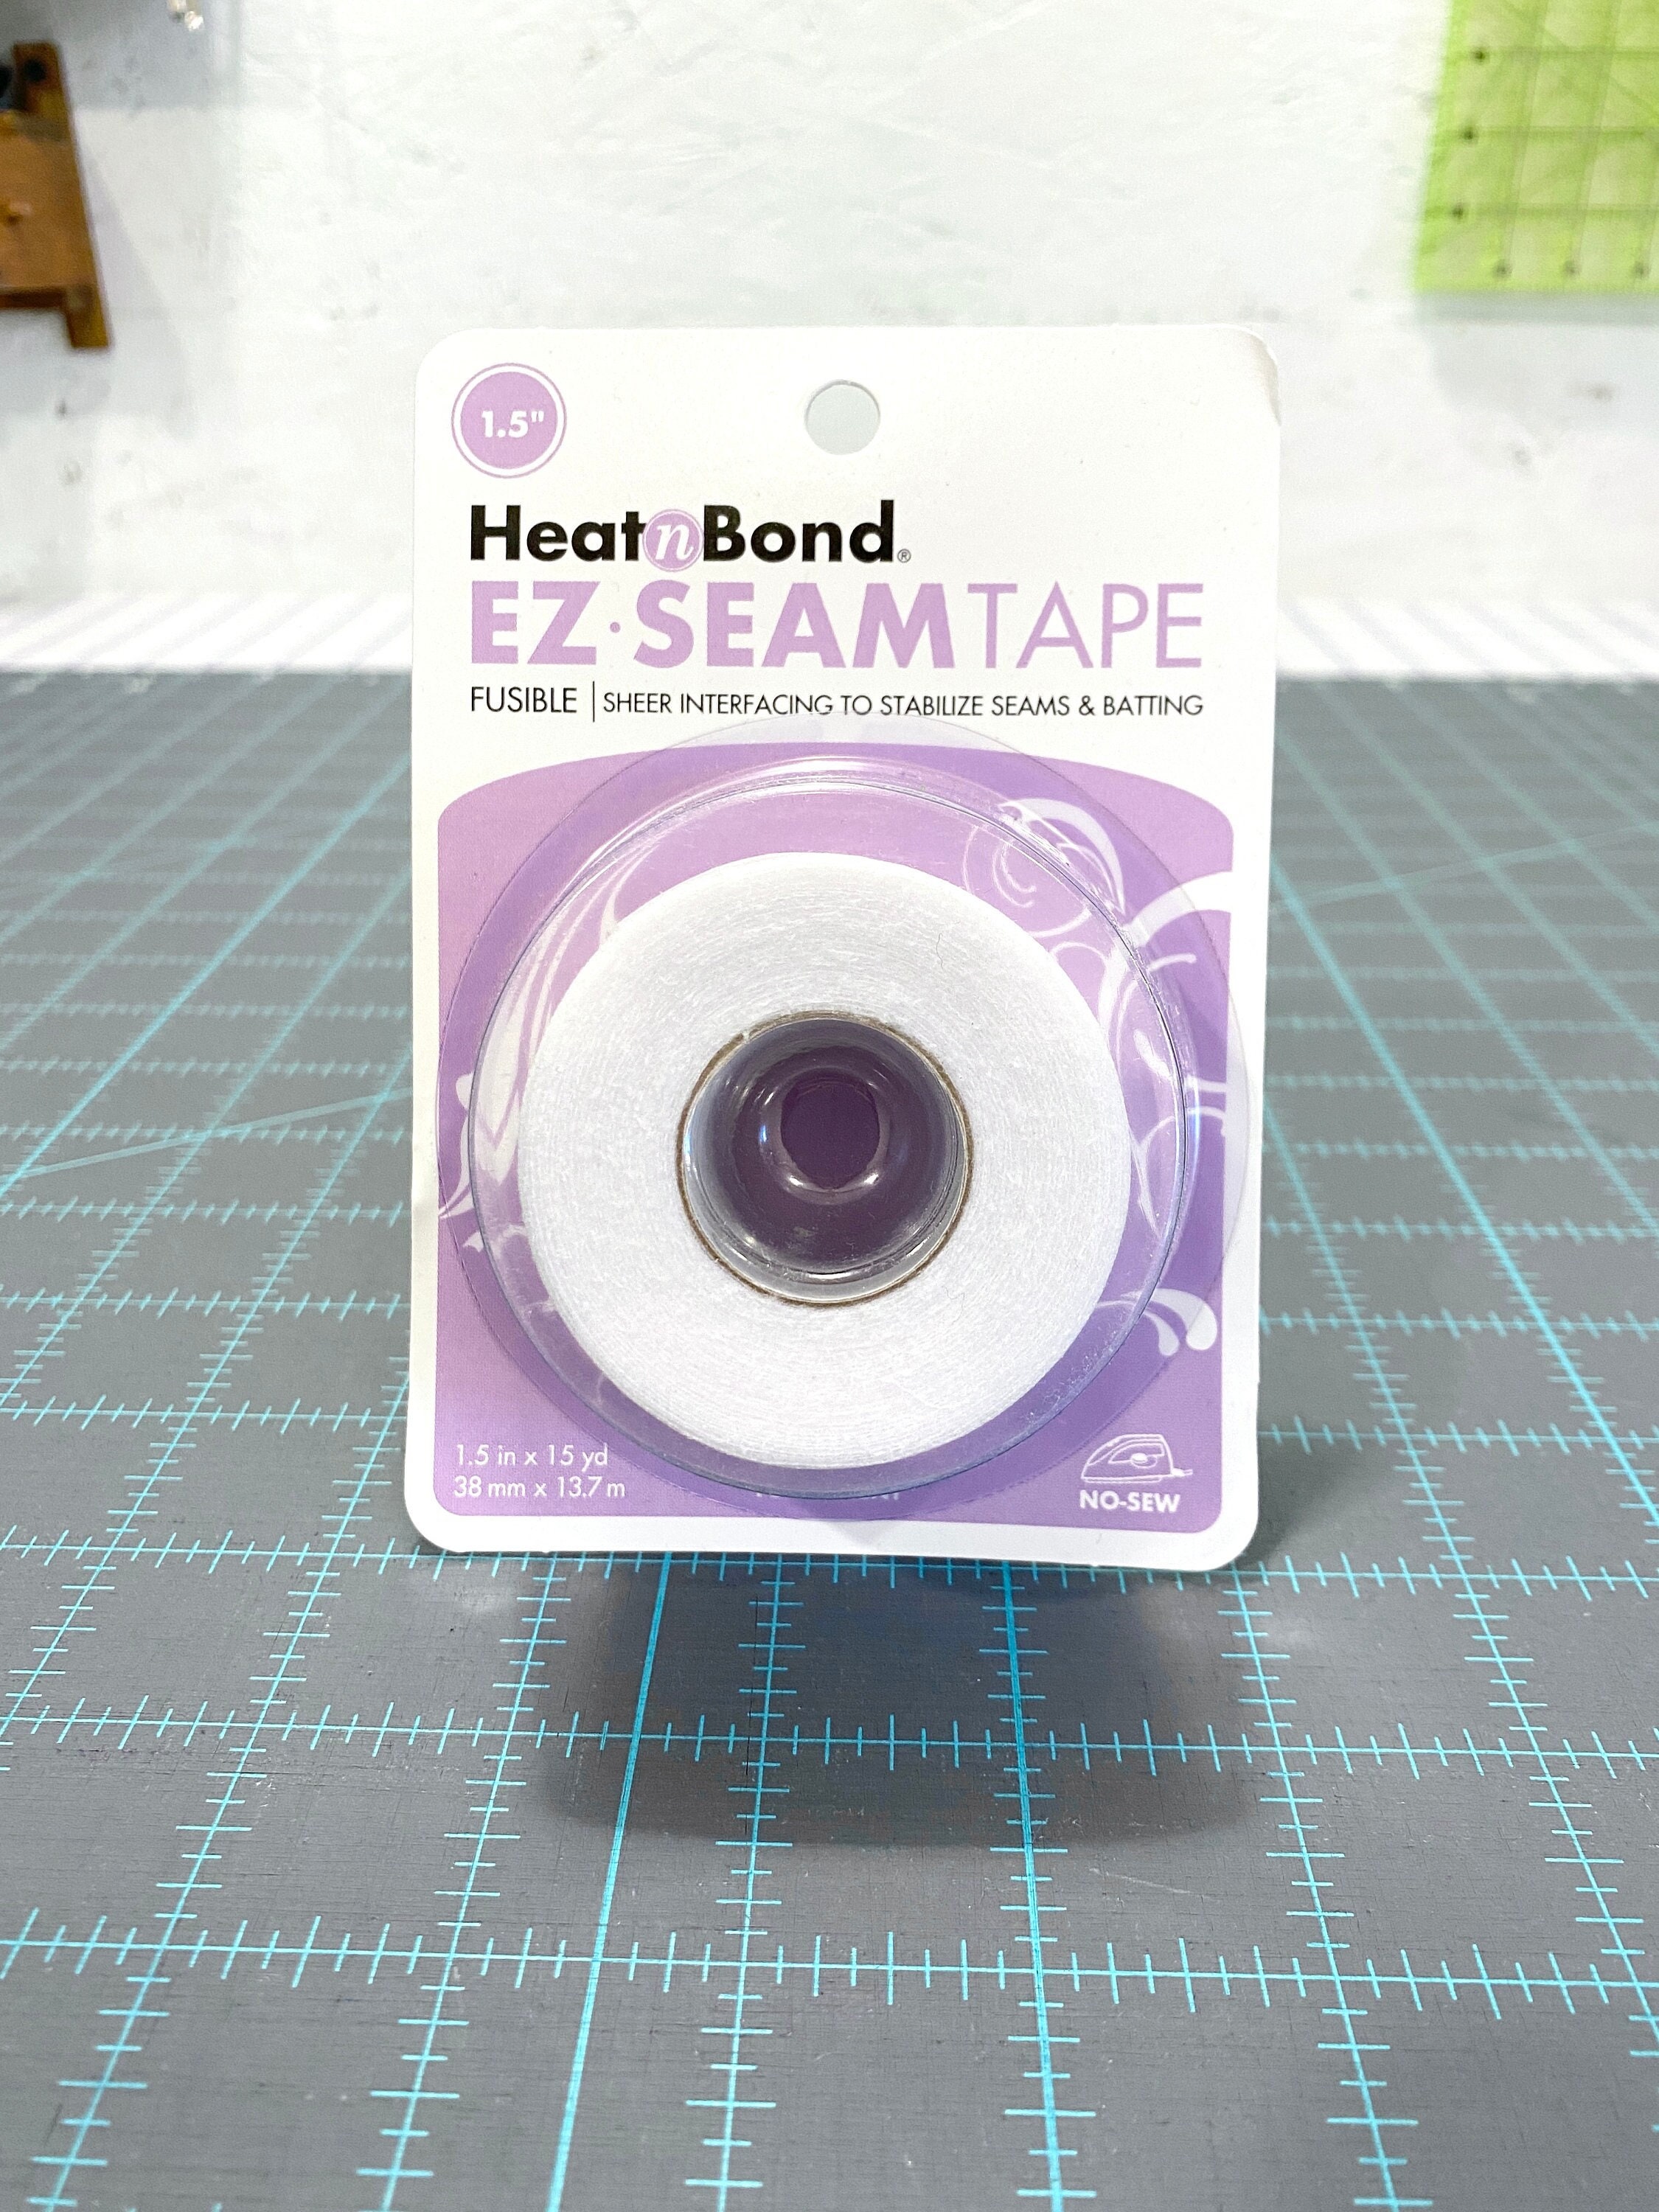 Iron on Adhesive Heat N Bond Hem No Sew Hemming Tape for Light